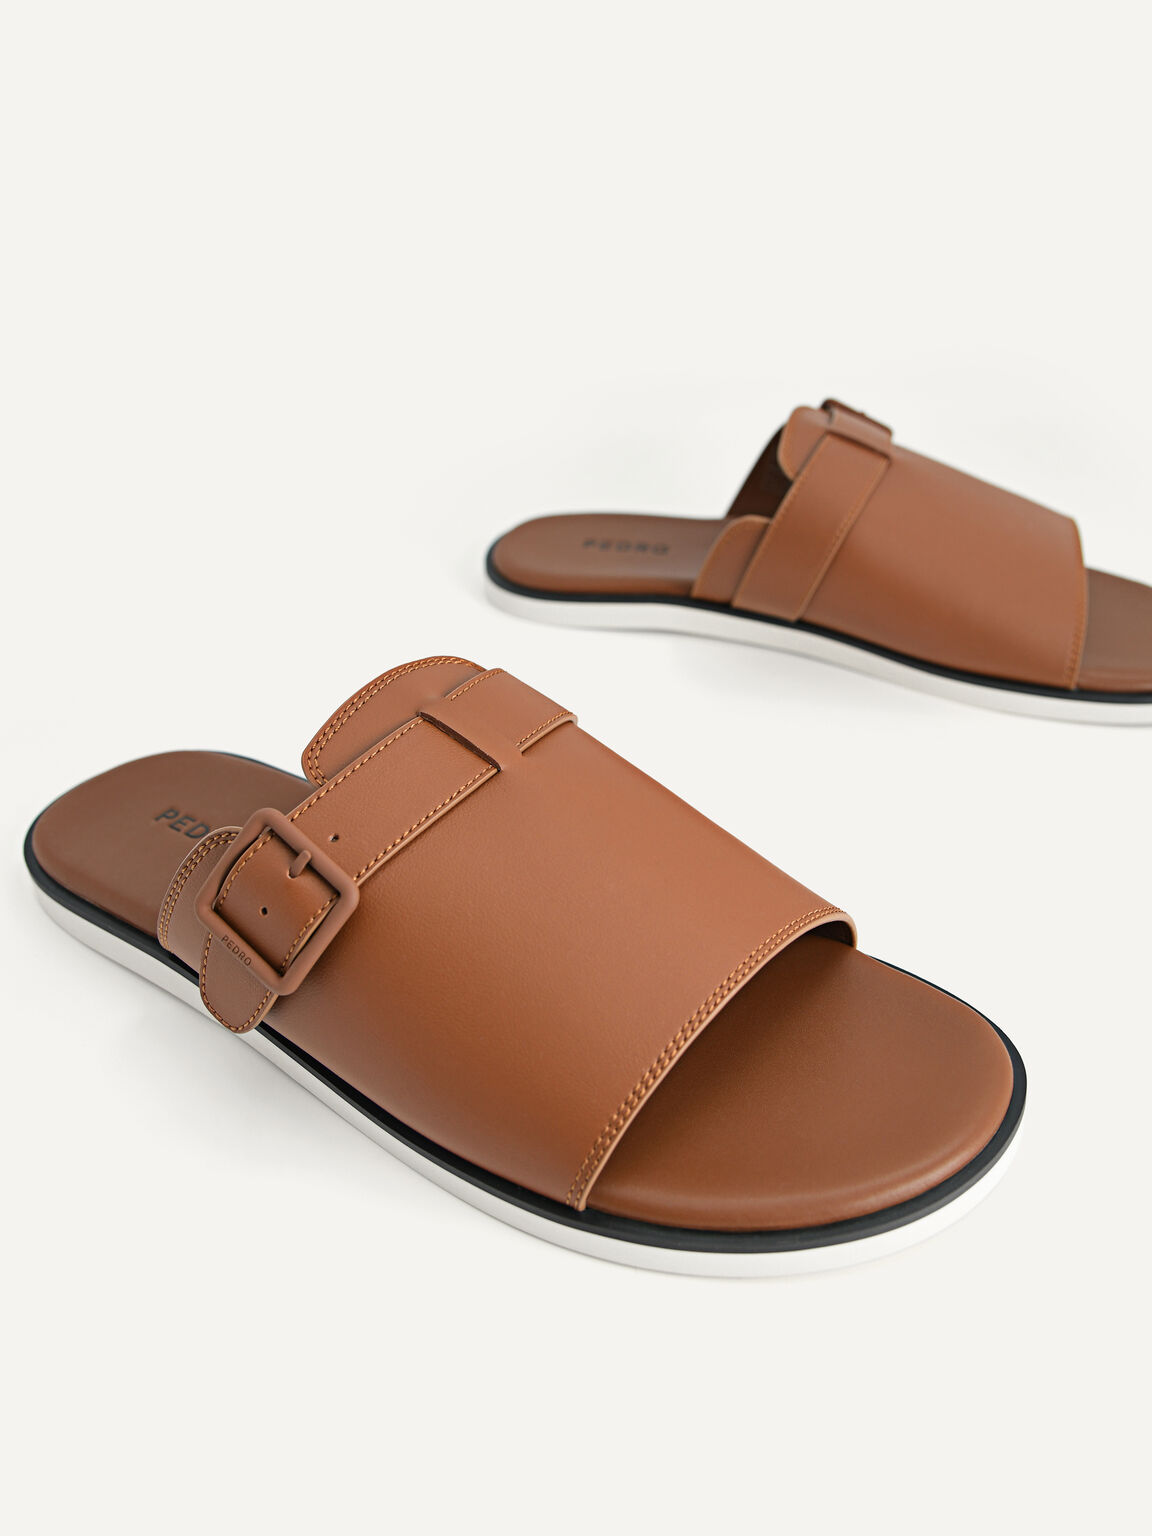 Monochrome Slide Sandals, Brown, hi-res